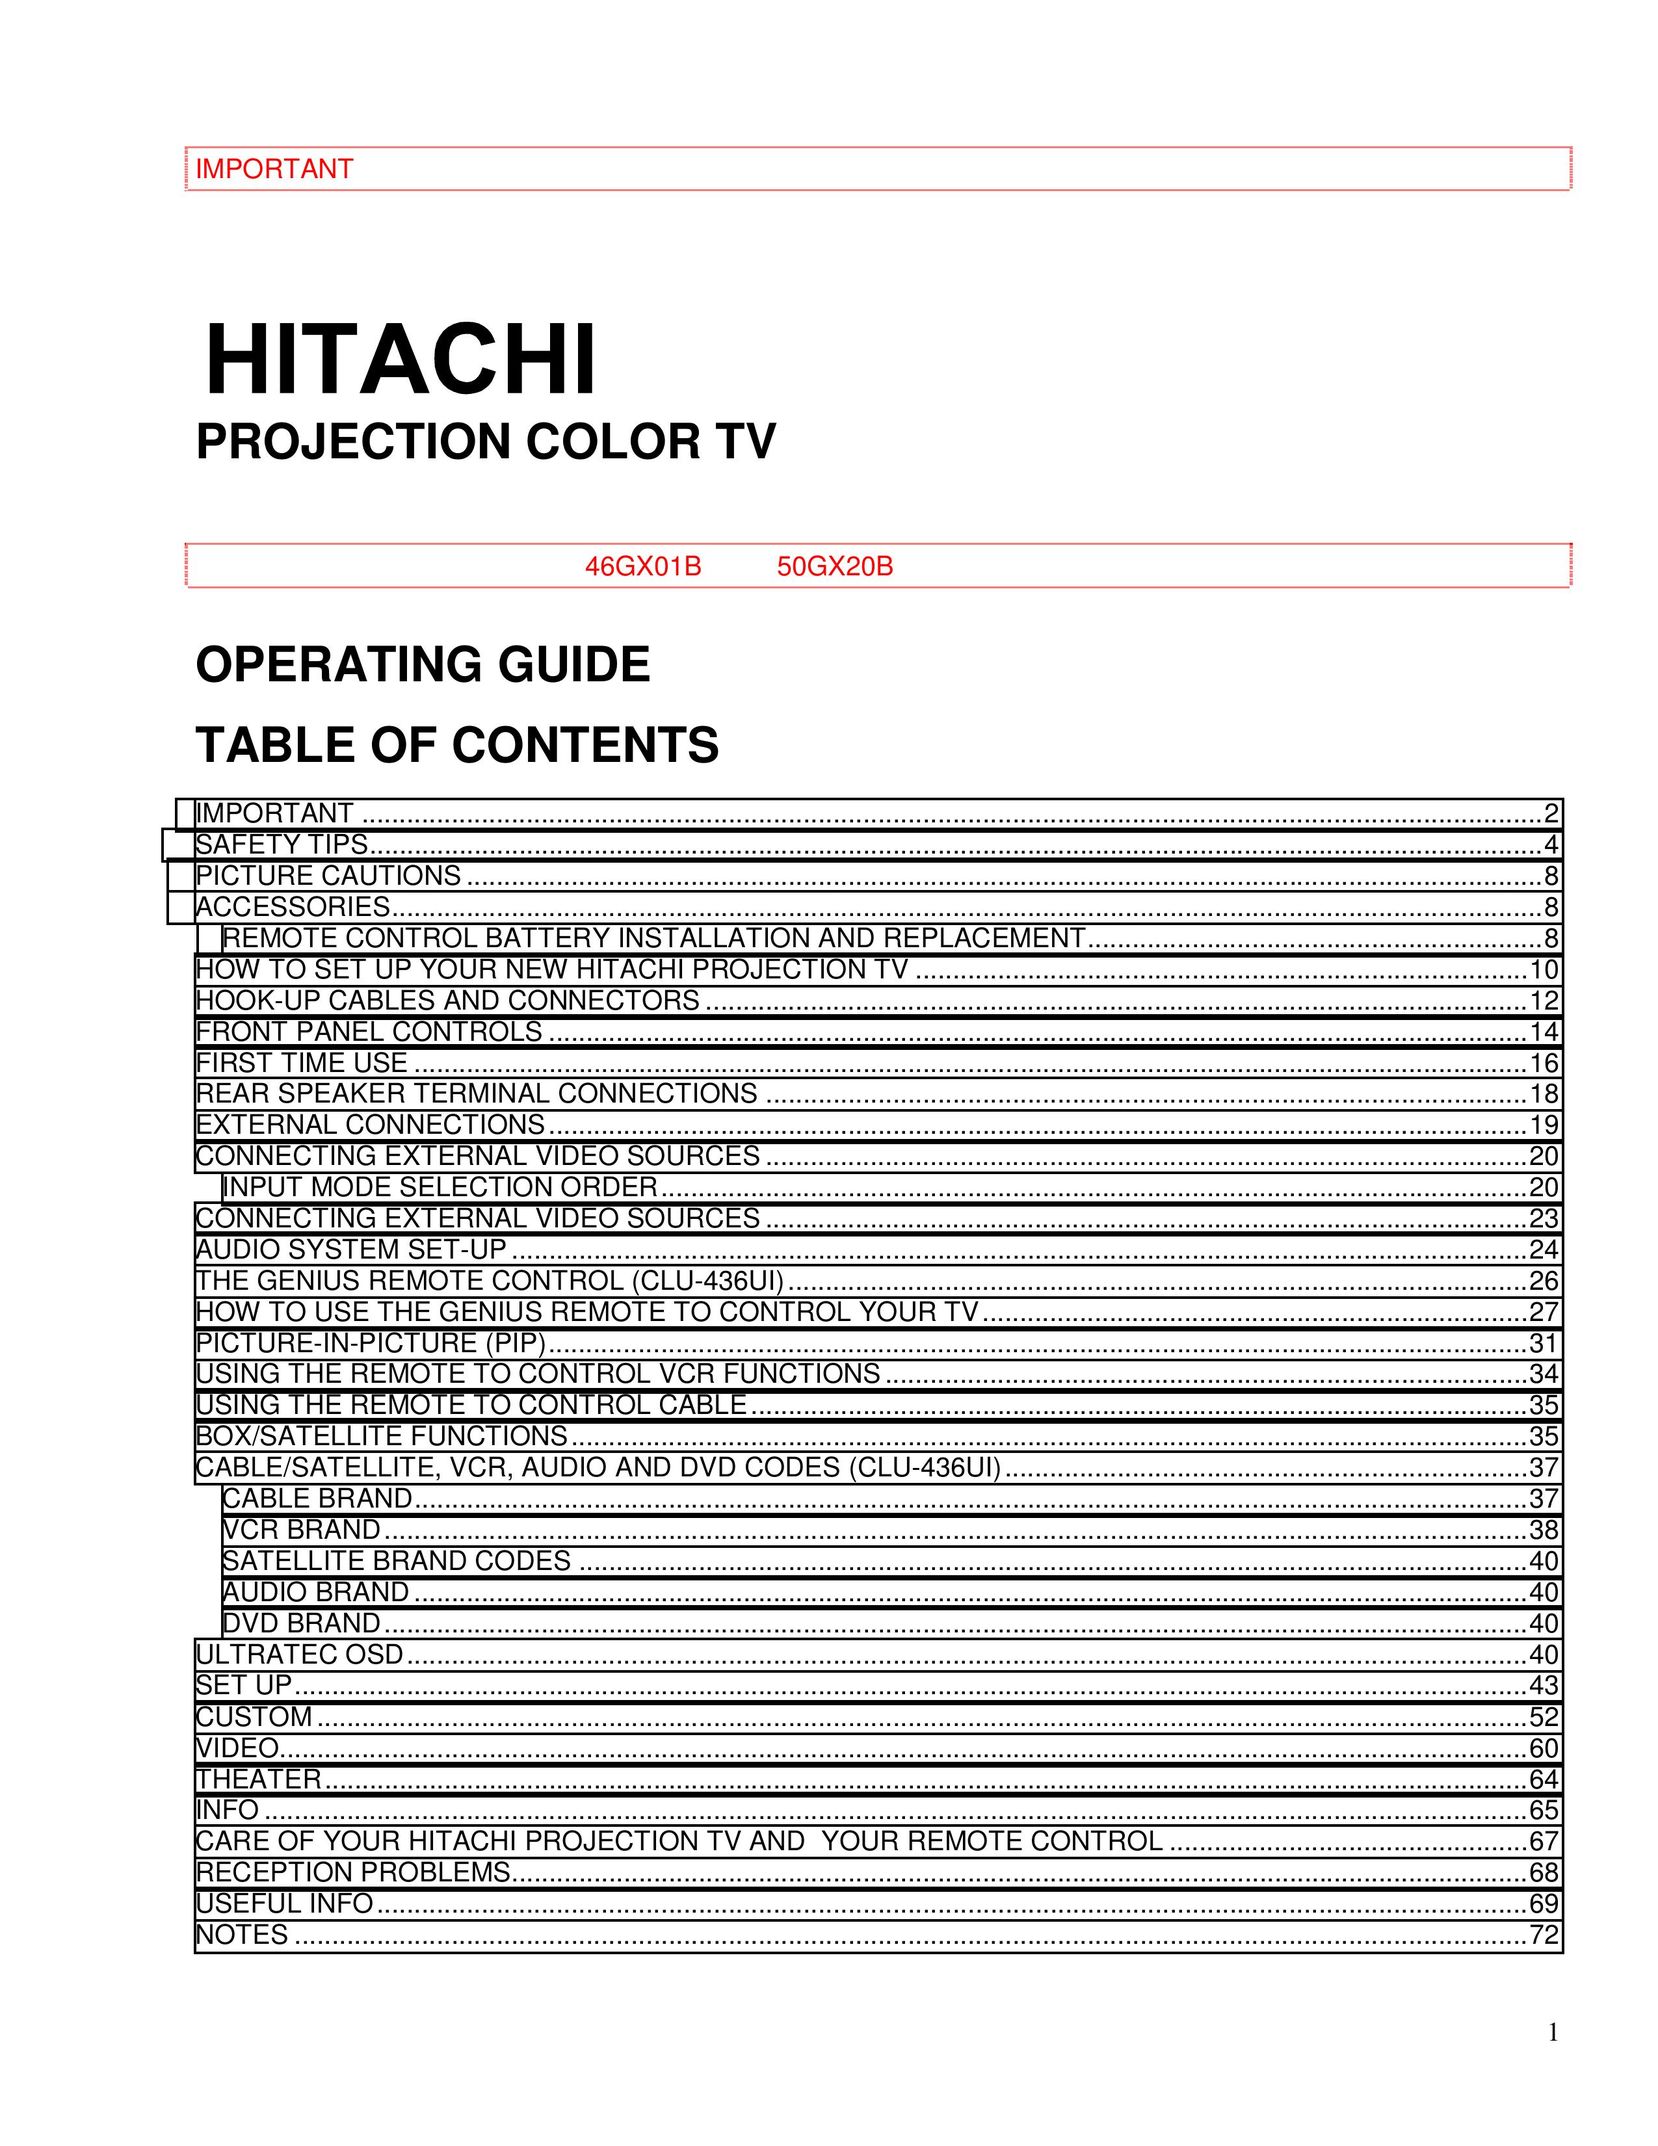 Hitachi 46GX01B Projection Television User Manual